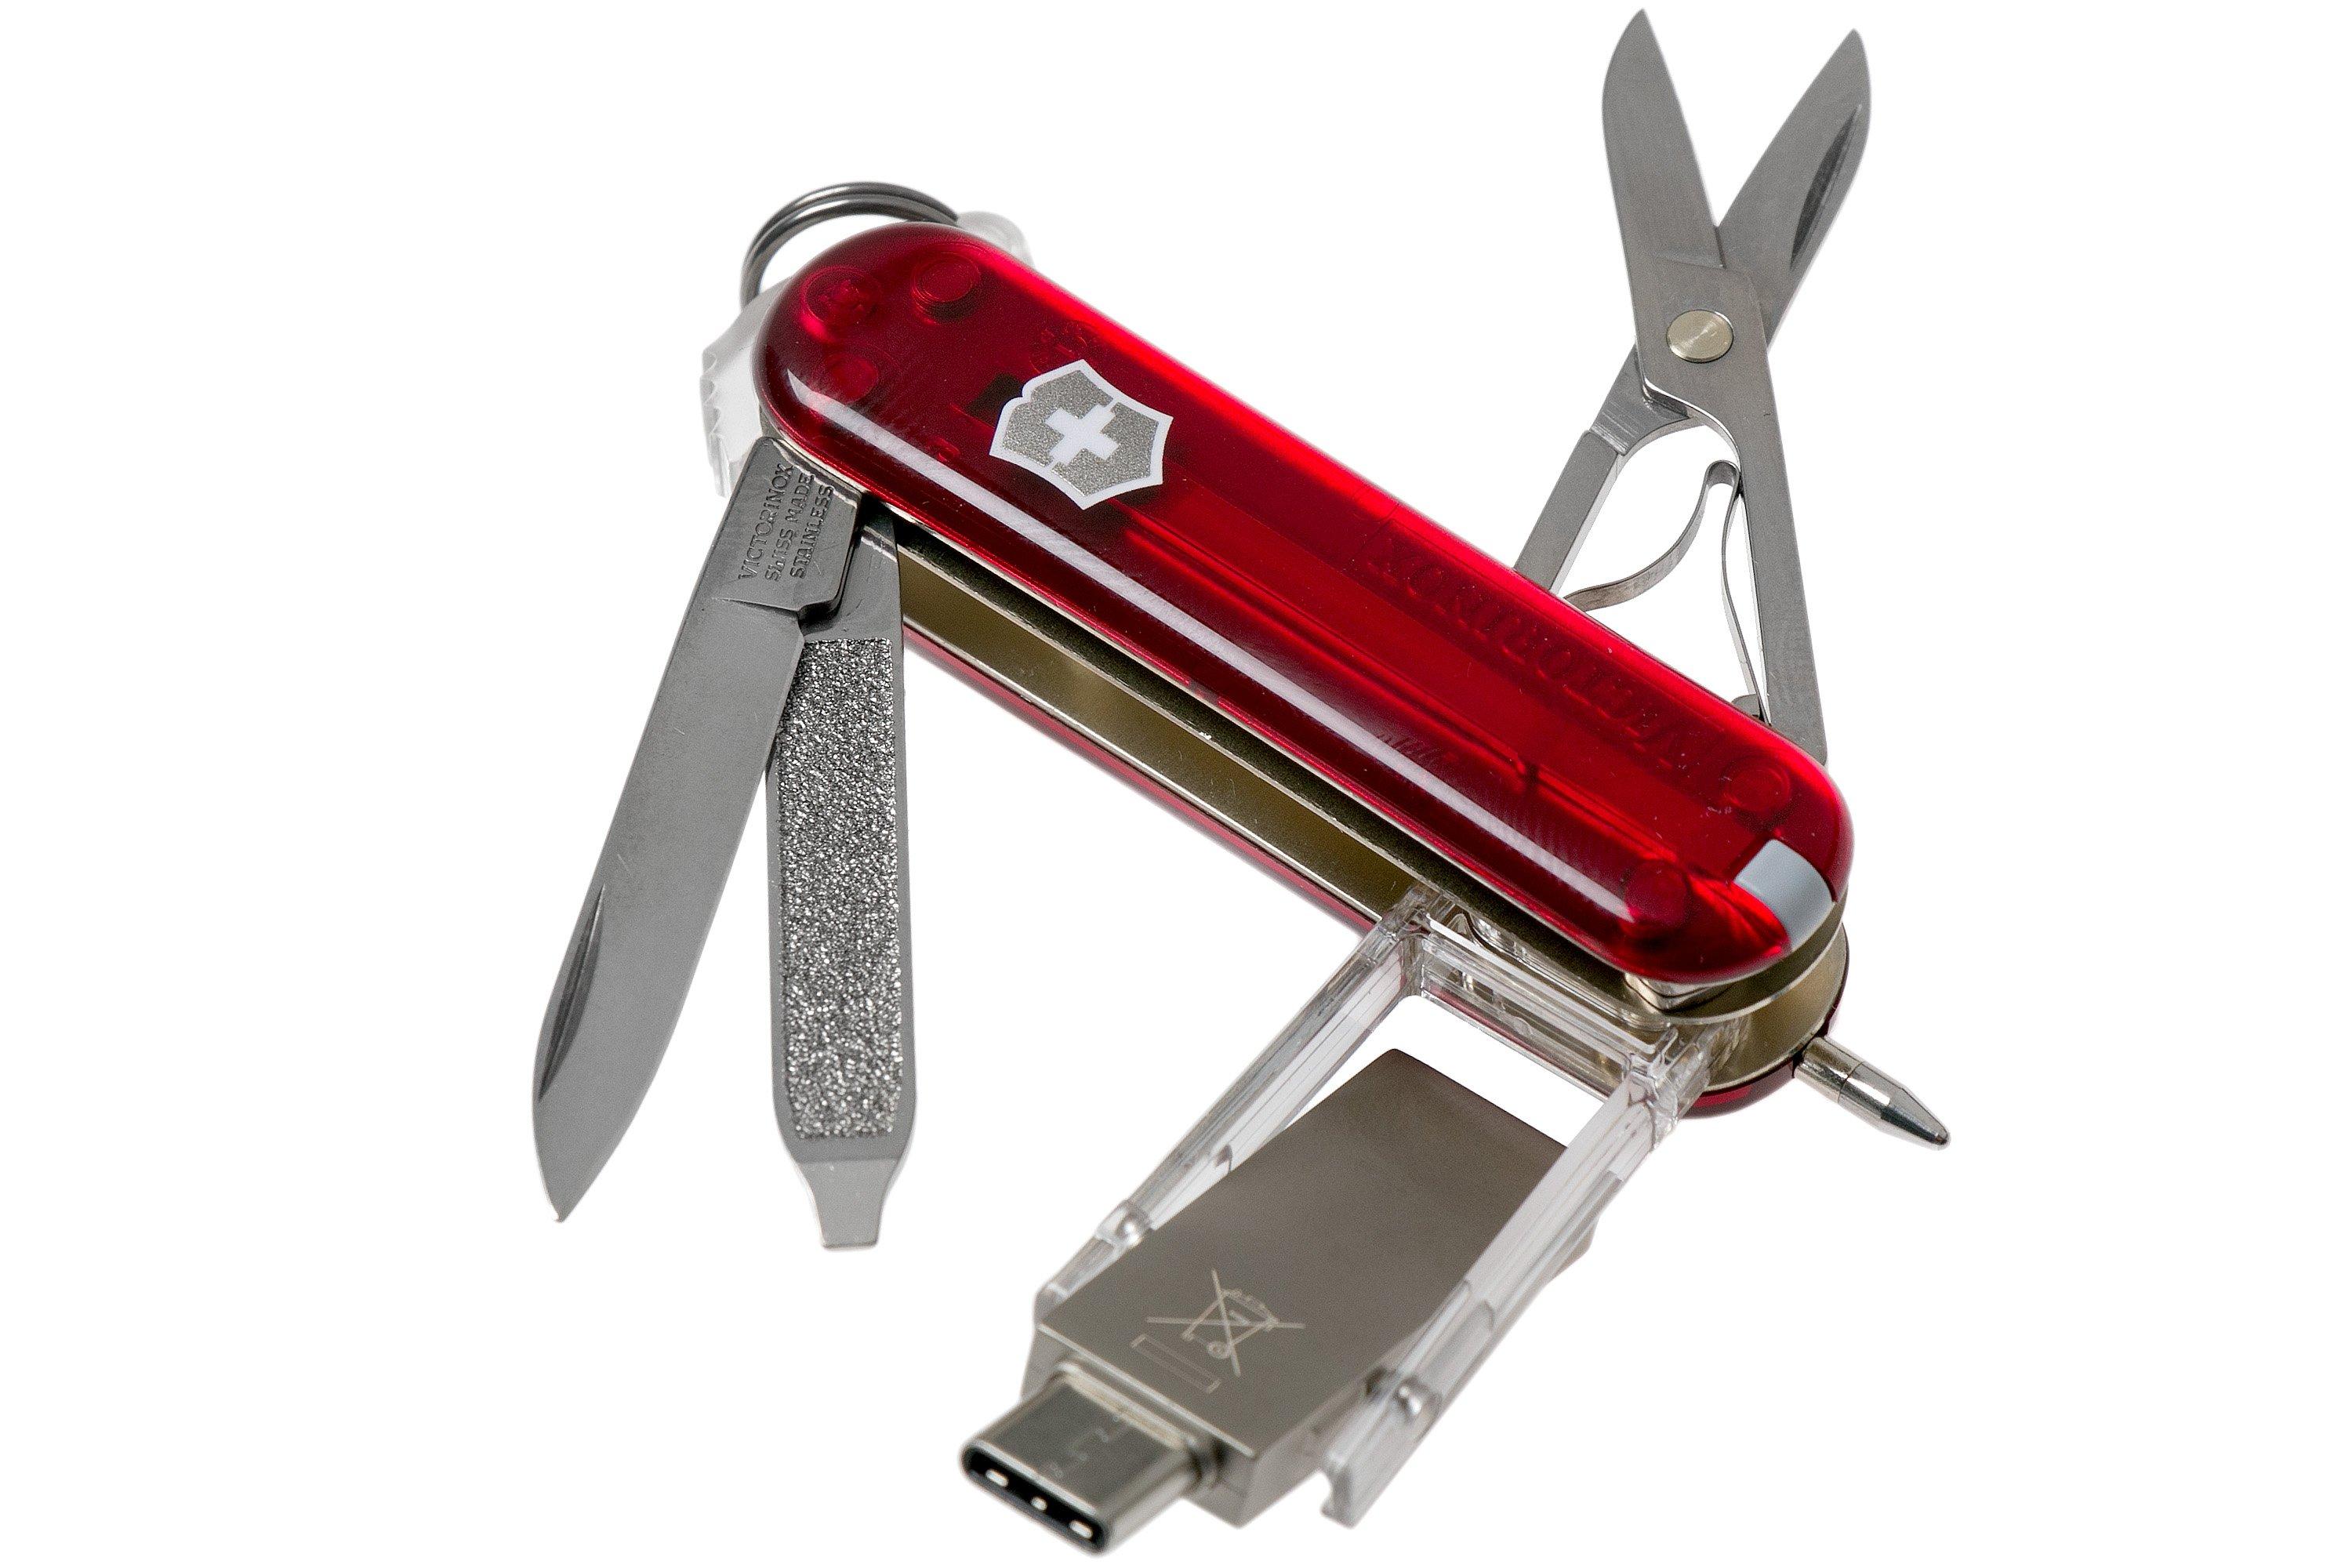 Dood in de wereld textuur krijgen Victorinox @ Work USB 3.0/3.1 32Gb 4.6235.TG32B1 Swiss pocket knife |  Advantageously shopping at Knivesandtools.com